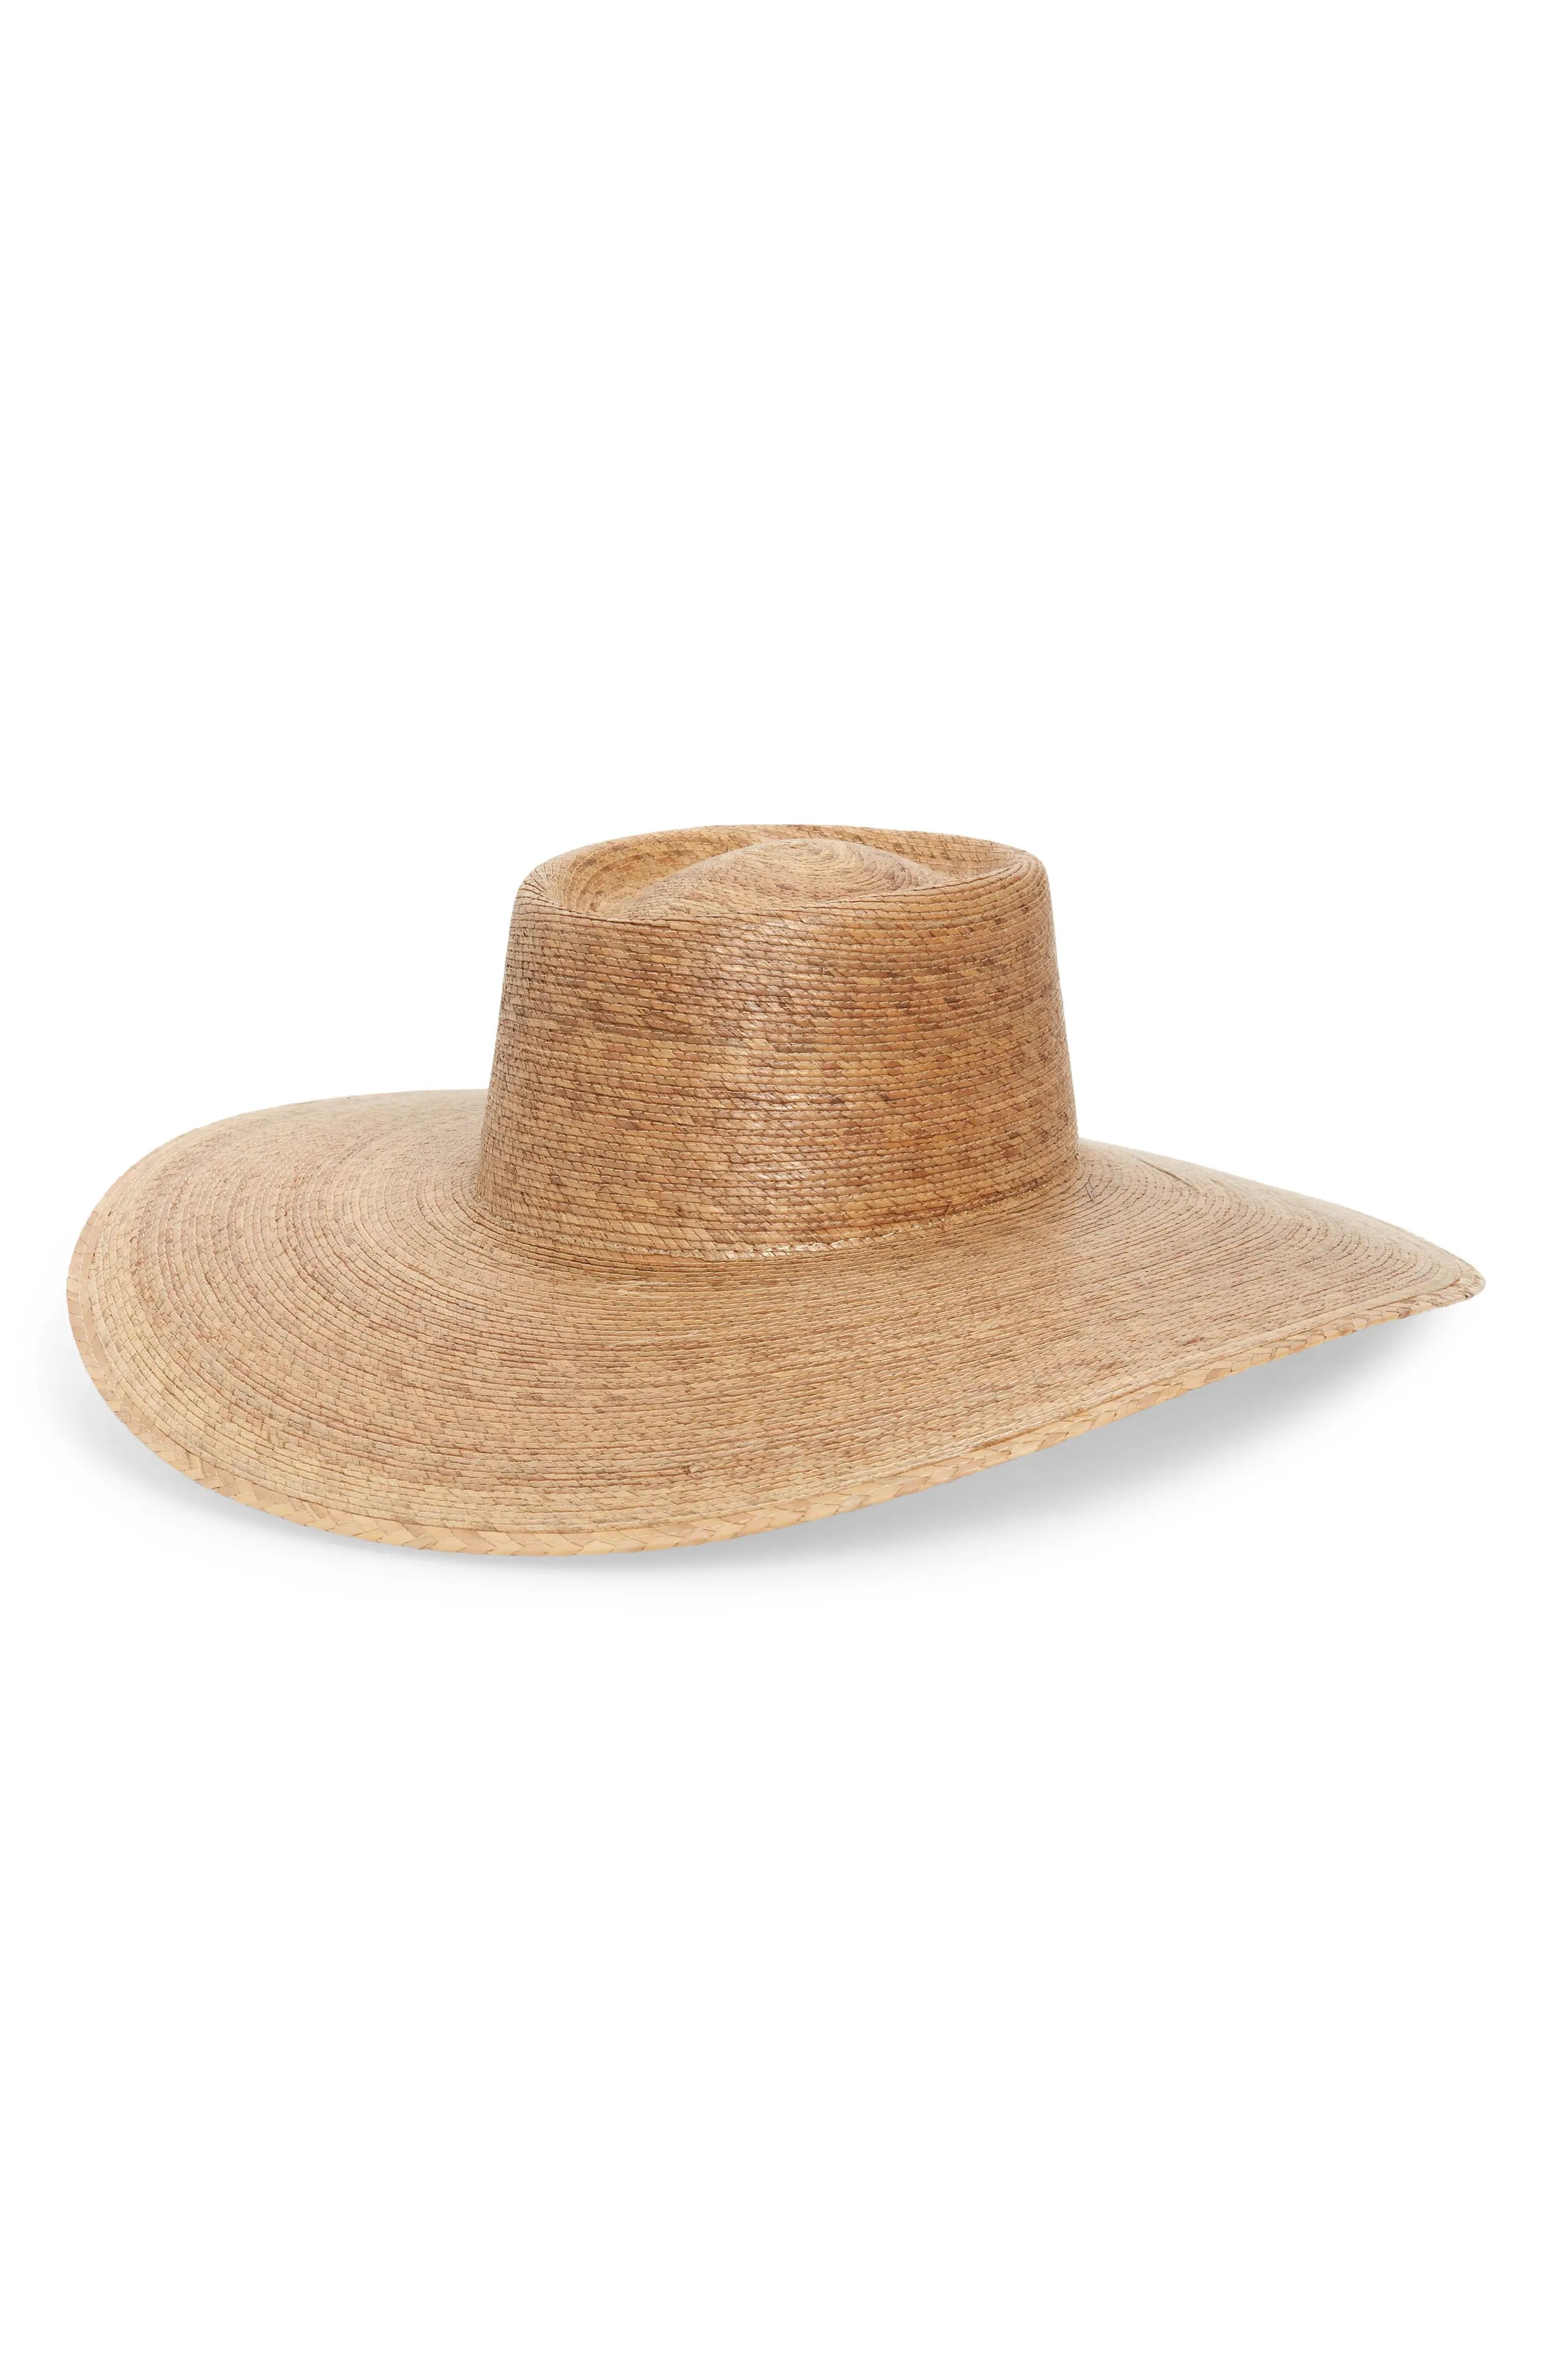 Lack of Color Palma Wide Boater Hat in Natural at Nordstrom, Size Large | Nordstrom